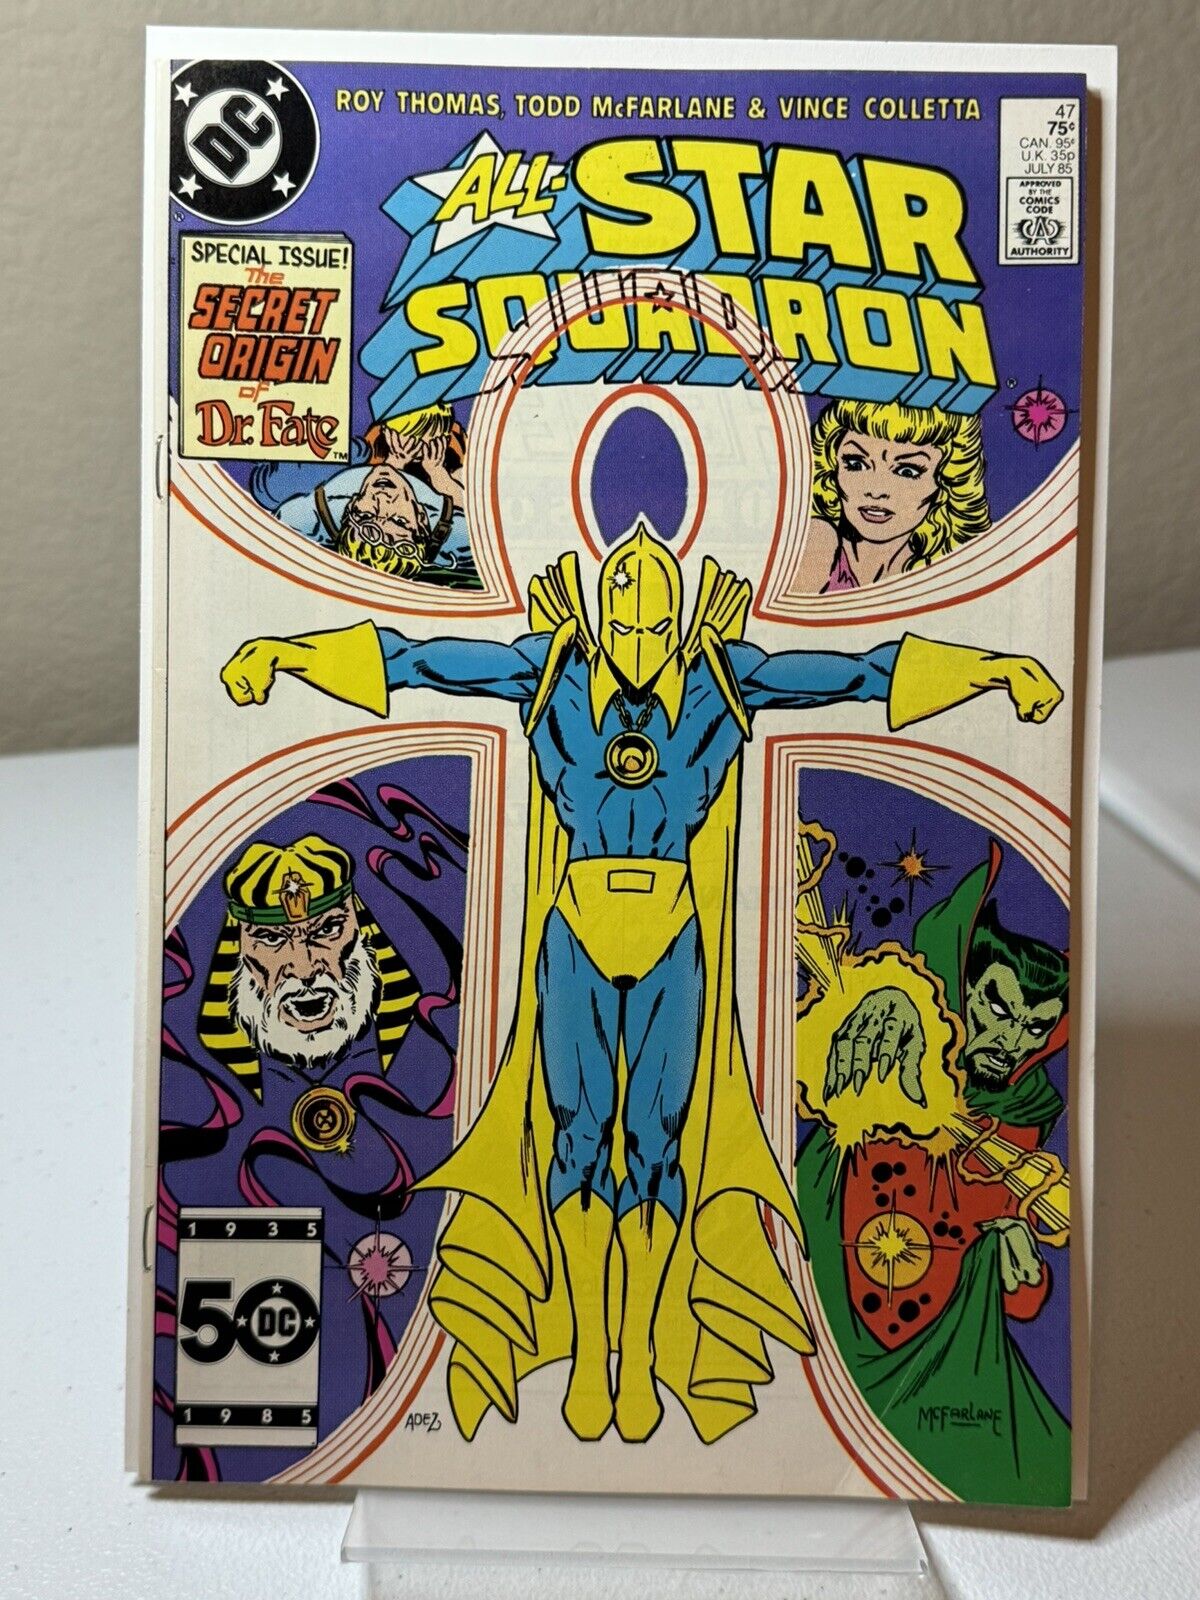 ALL STAR SQUADRON #47 1985 DC COMICS TODD MCFARLANE COVER DOCTOR FATE